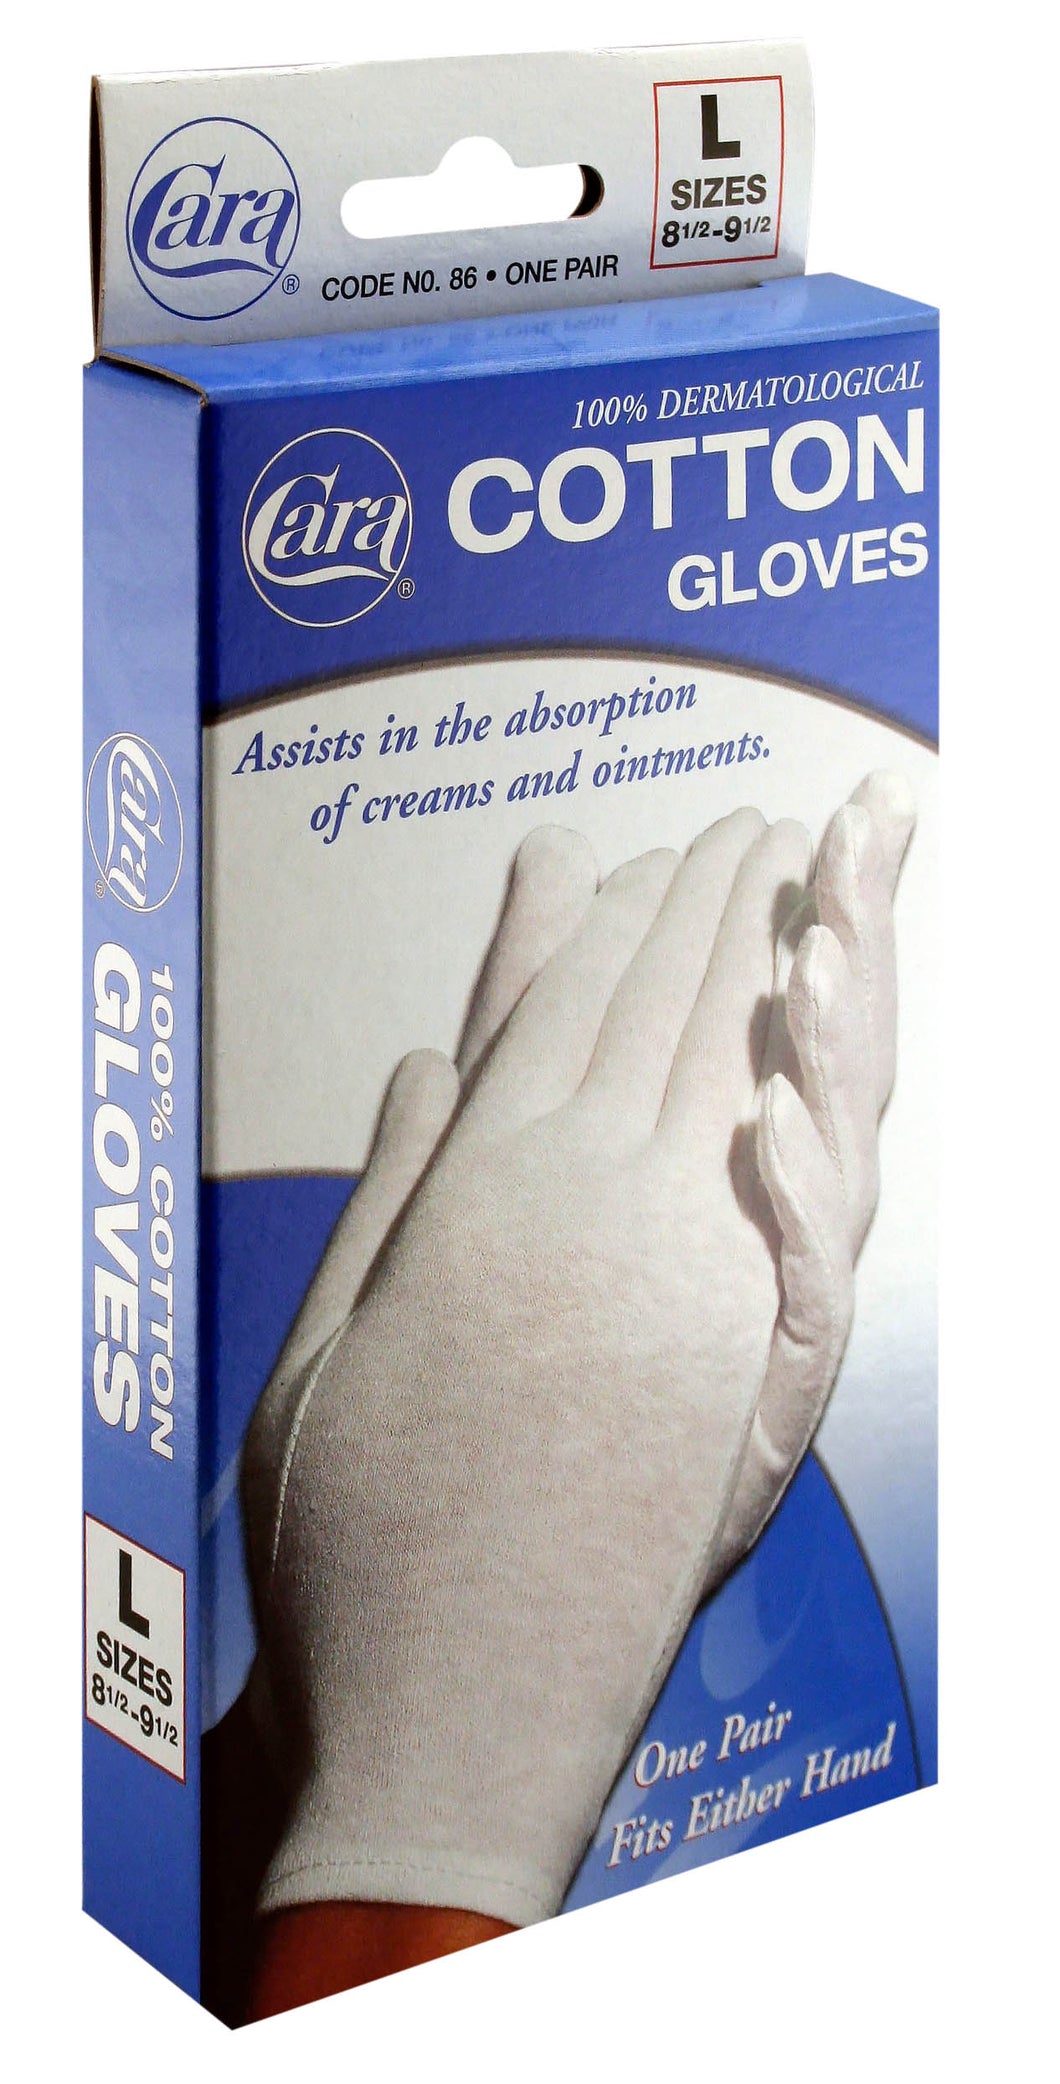 Dermatological Cotton Gloves - Large